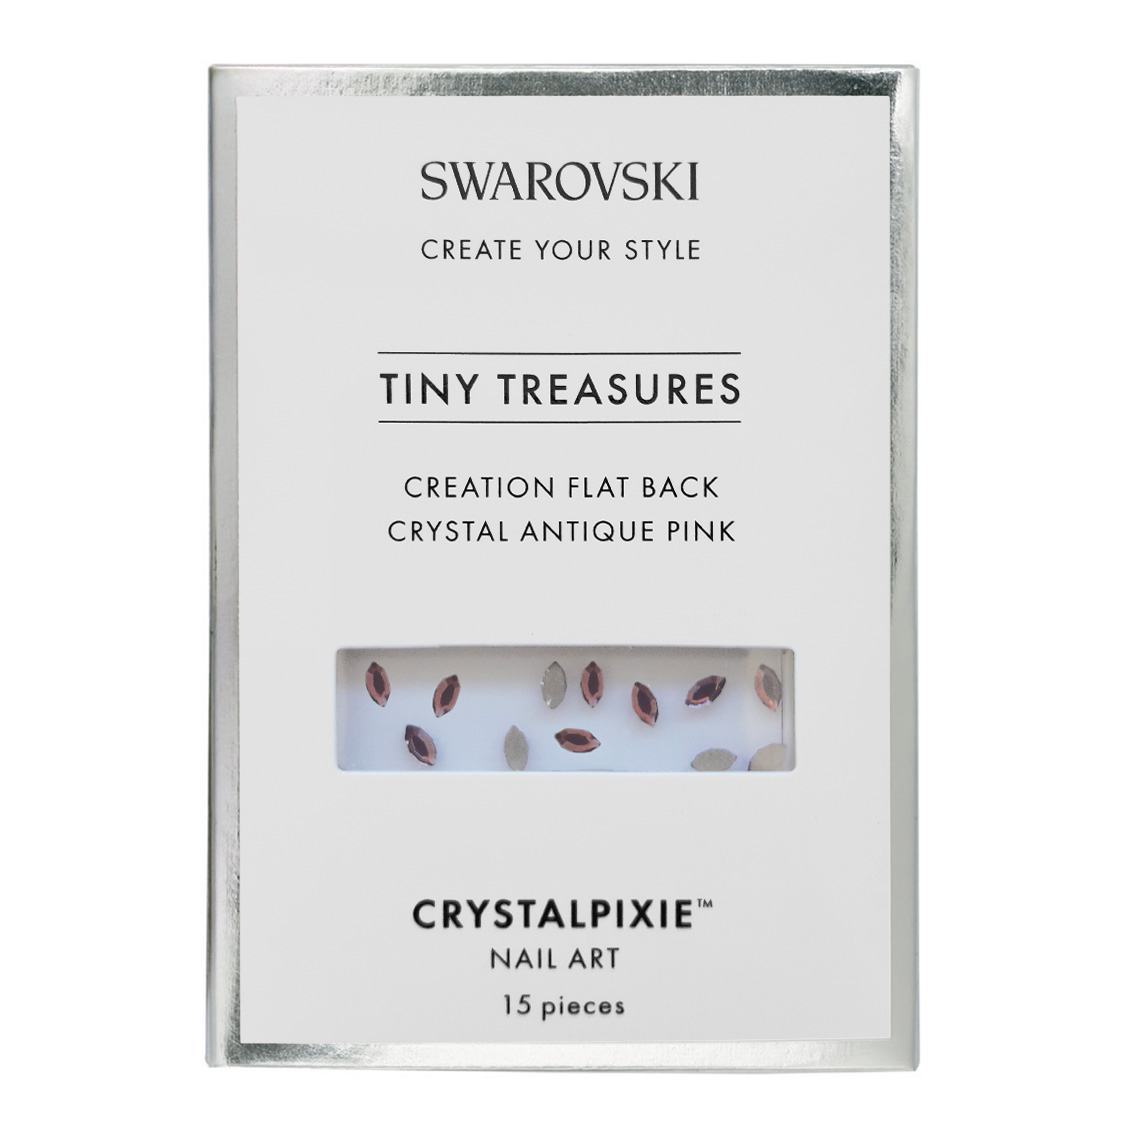 Creation Flat Back - Crystal Antique Pink 15 pz - Swarovski Tiny Treasures